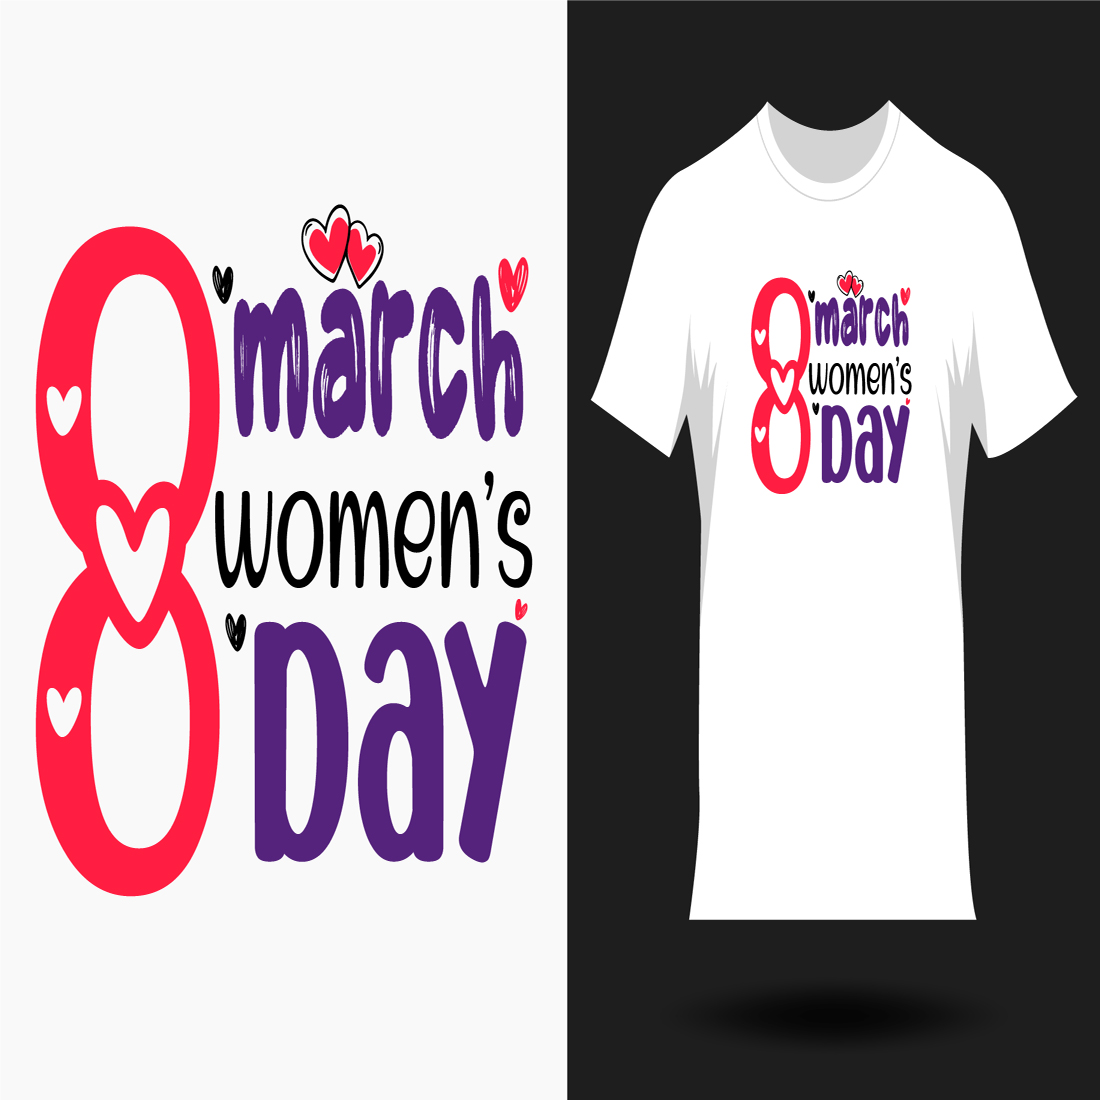 women s day t shirt design.jpg 1 895